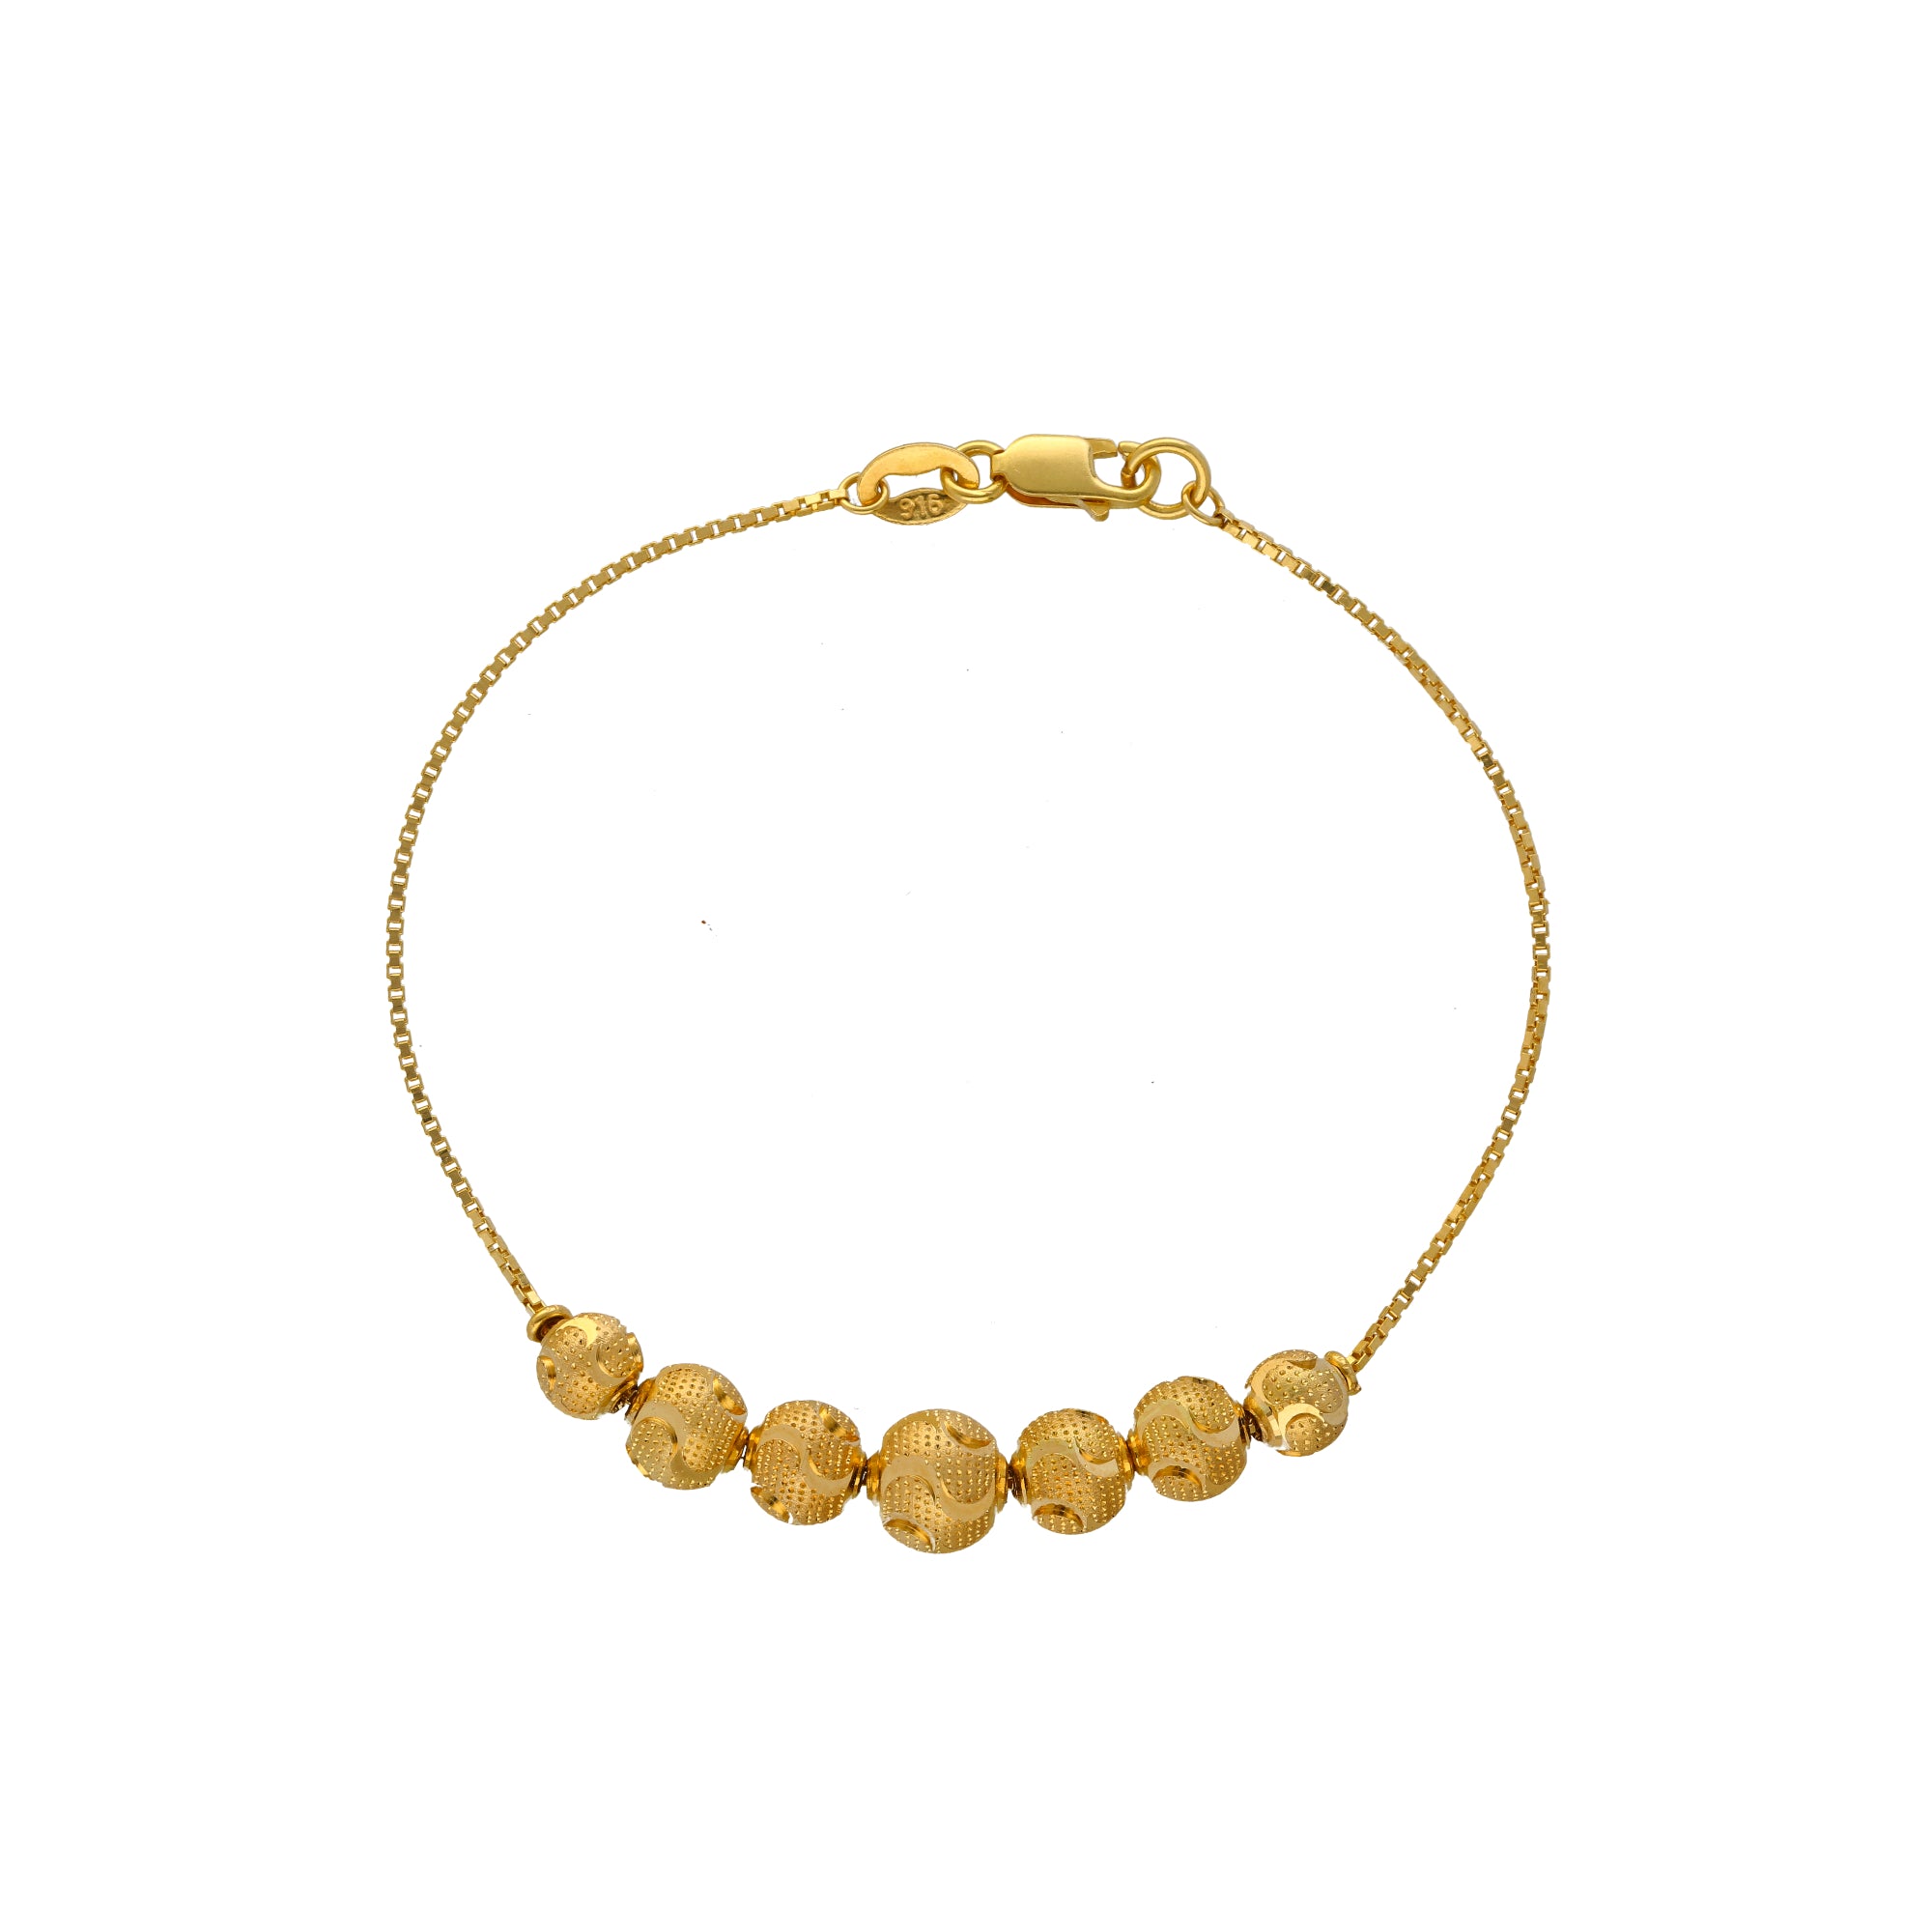 5 22 KT Yellow Gold Bracelets Designs, Buy Price @ 9262 - CaratLane.com